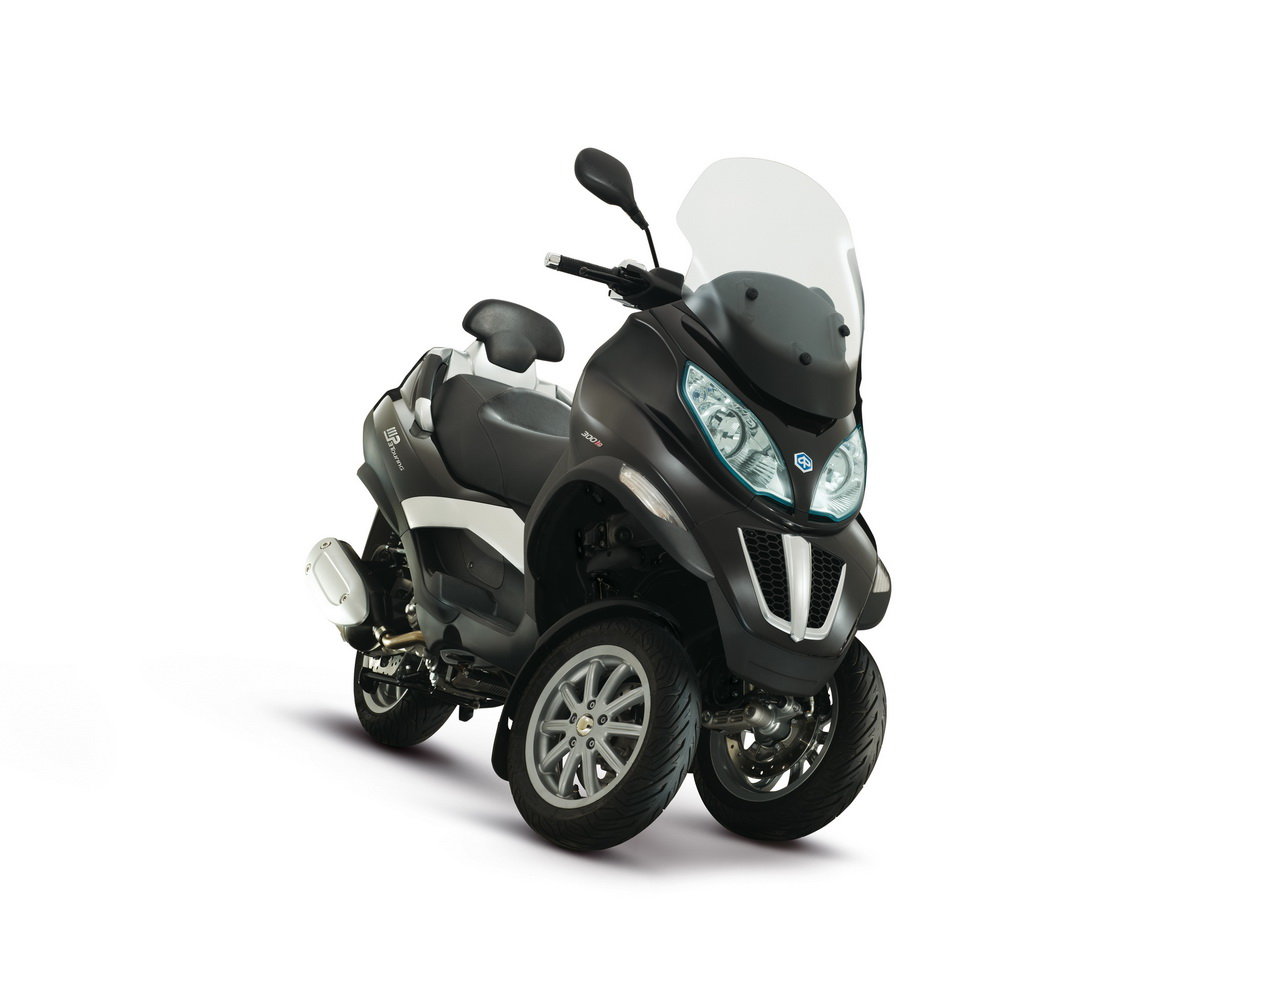 Listino Piaggio X 10 125 Scooter 125 - image 15113_piaggio-mp3400-ie-touring-lt on https://moto.motori.net